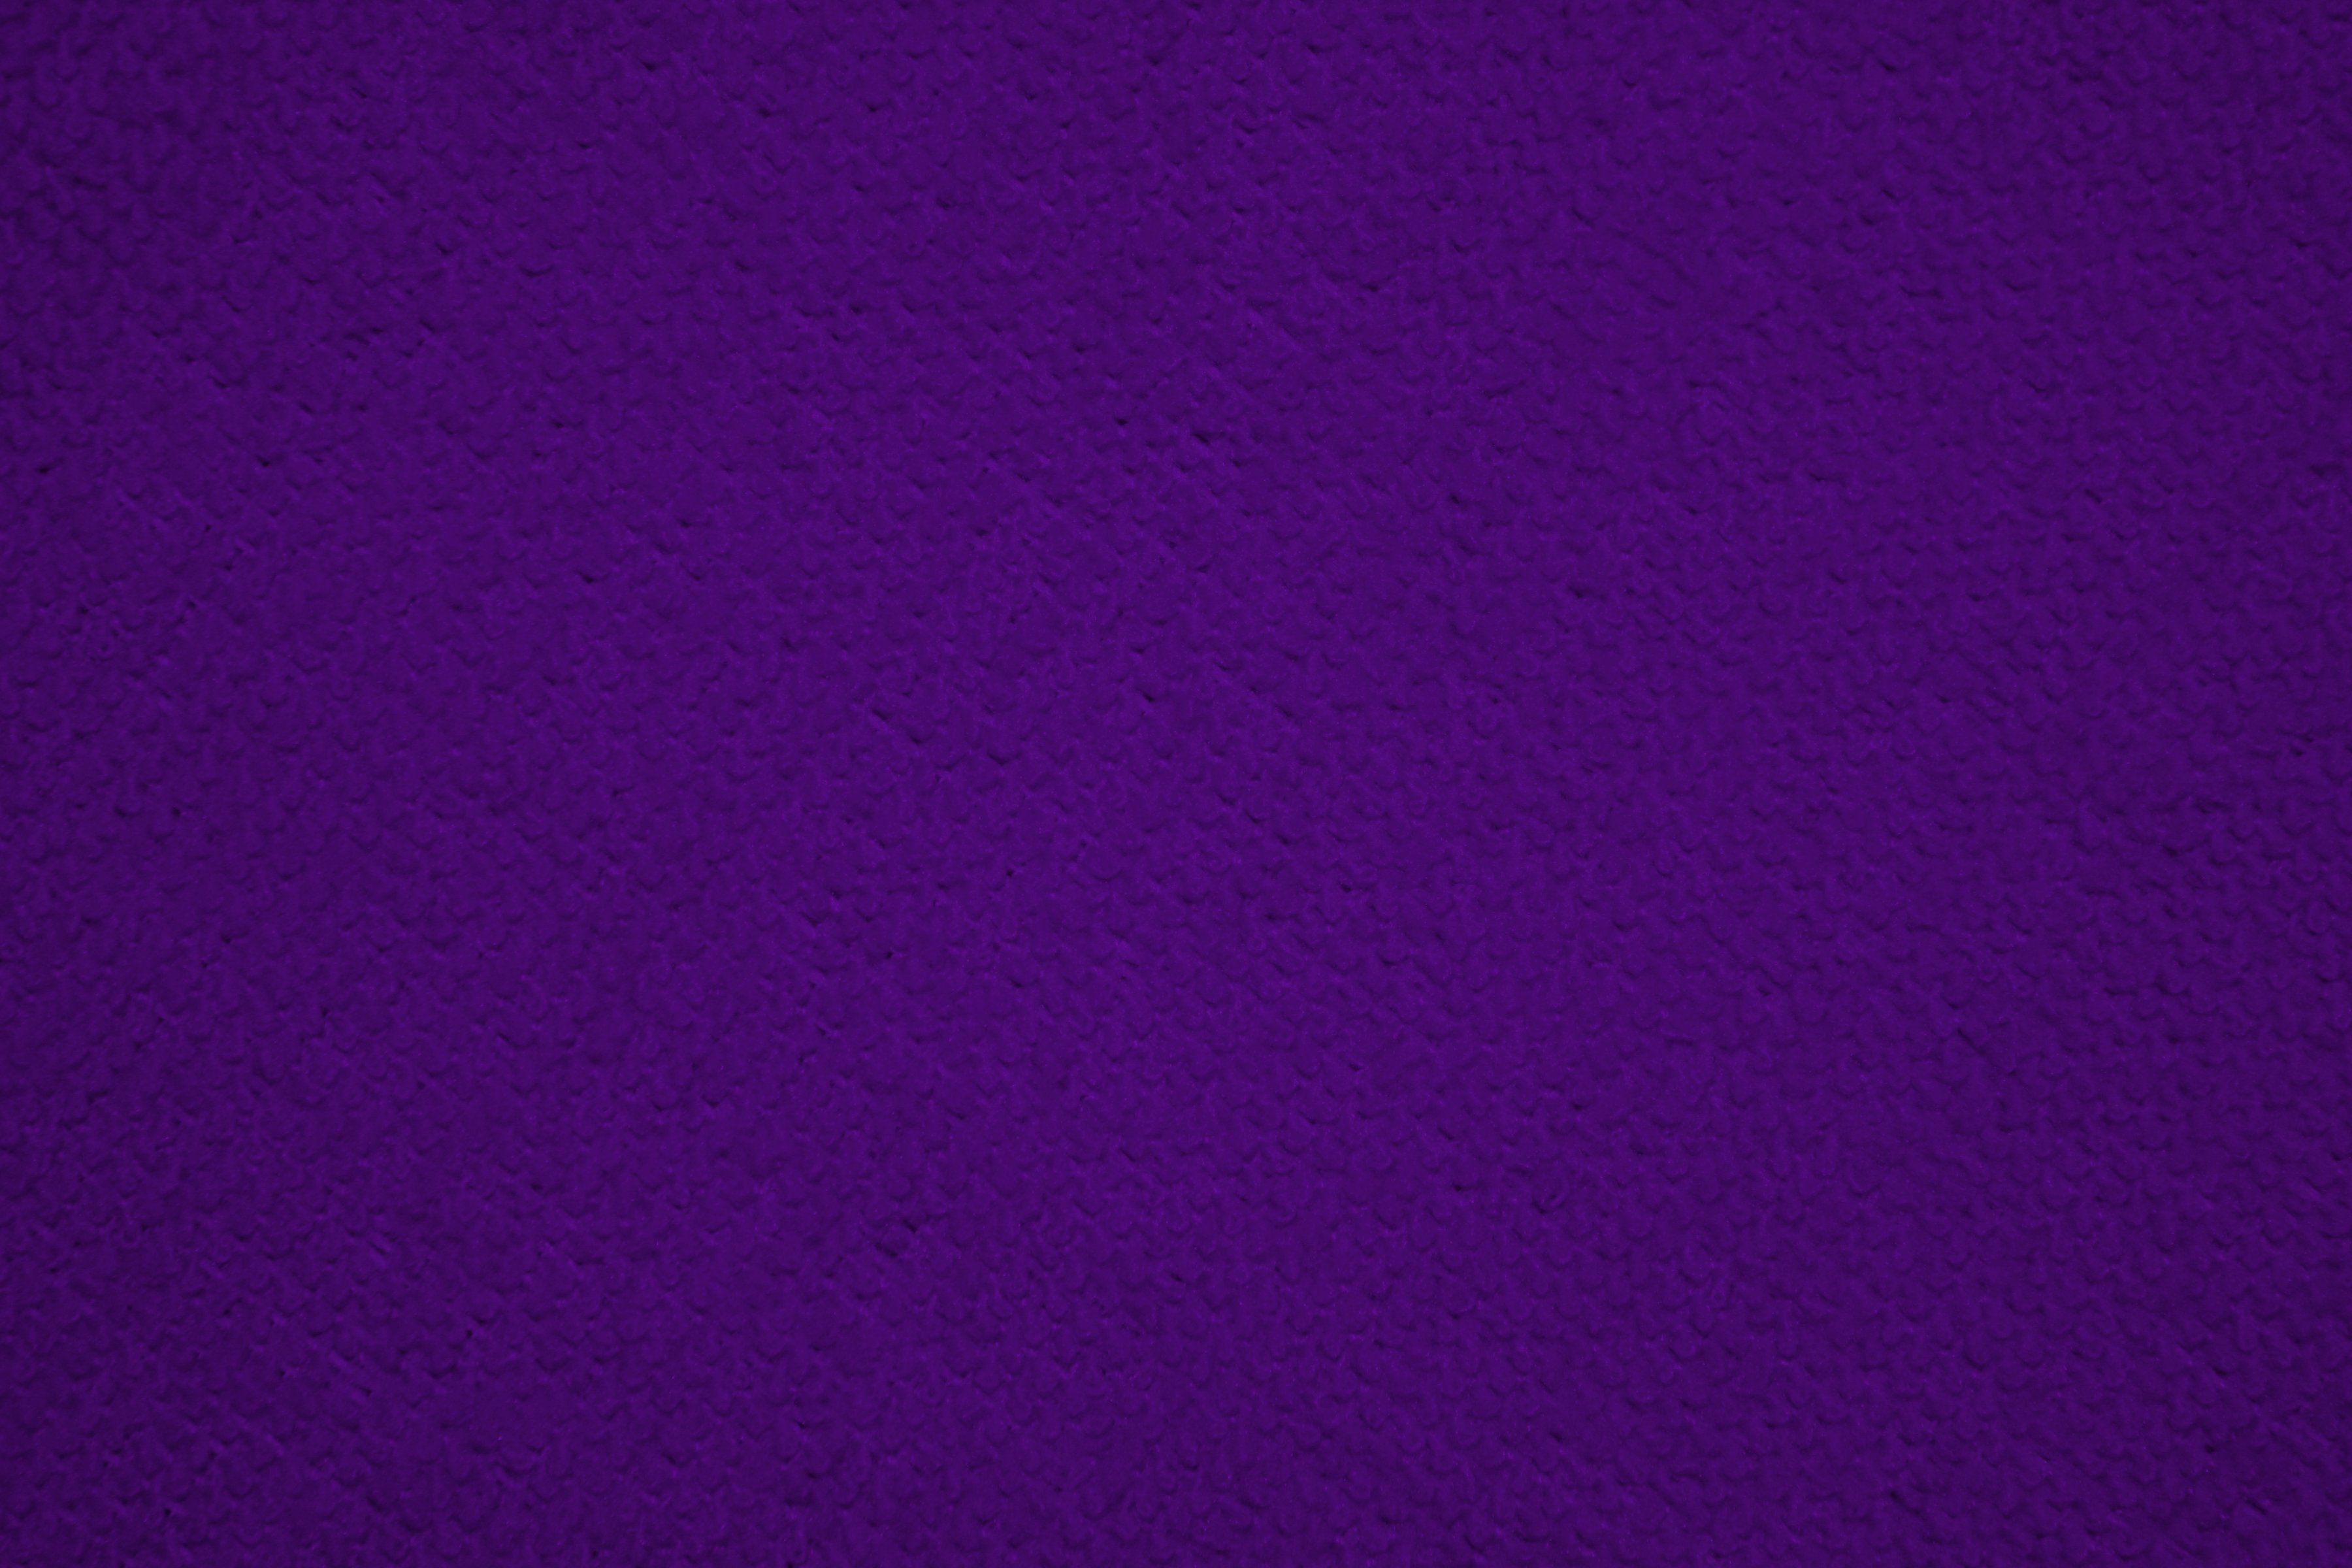 Dark Purple Wallpaper Images  Free Download on Freepik